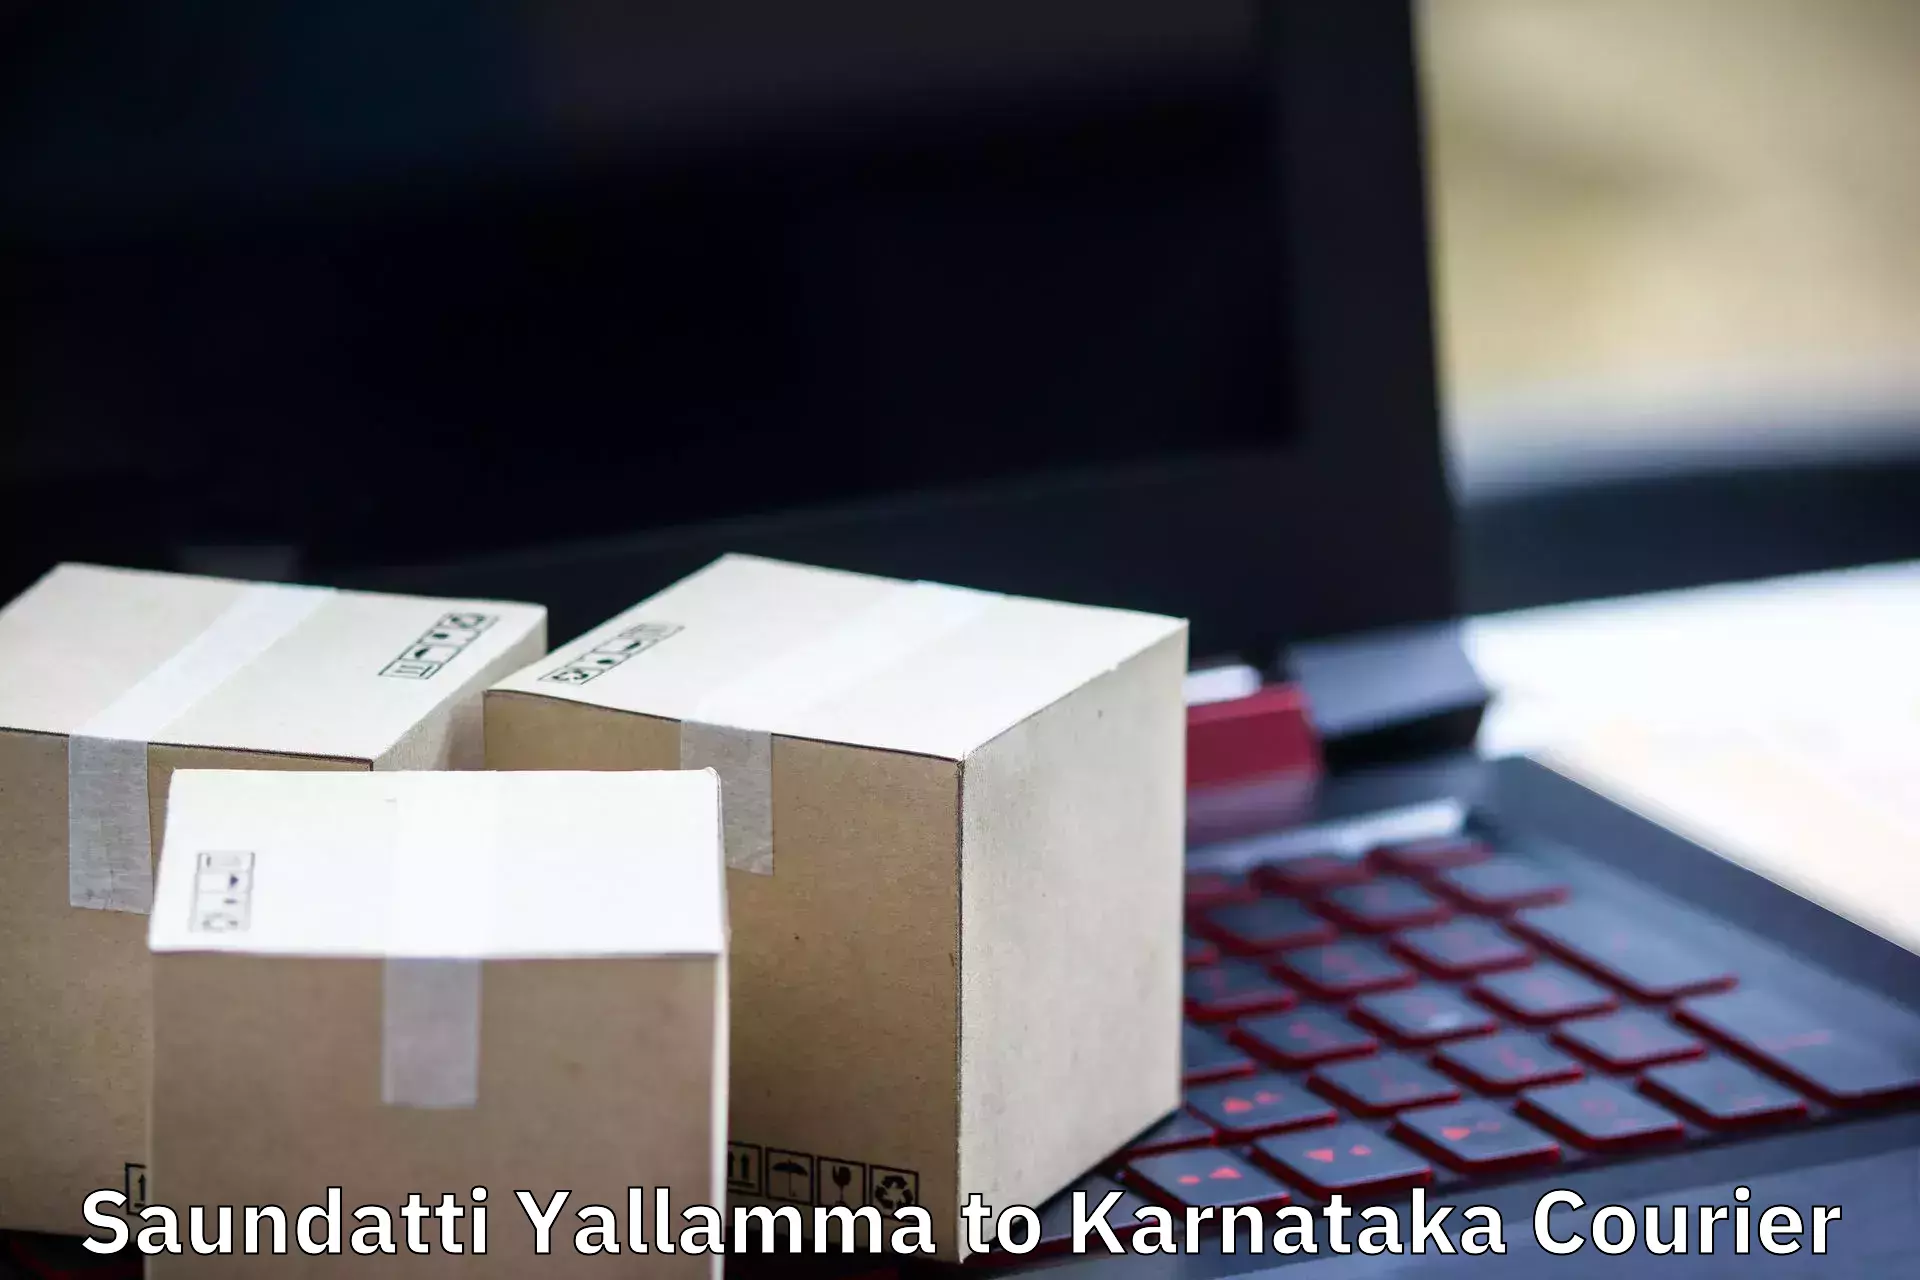 Moving service excellence Saundatti Yallamma to Karnataka